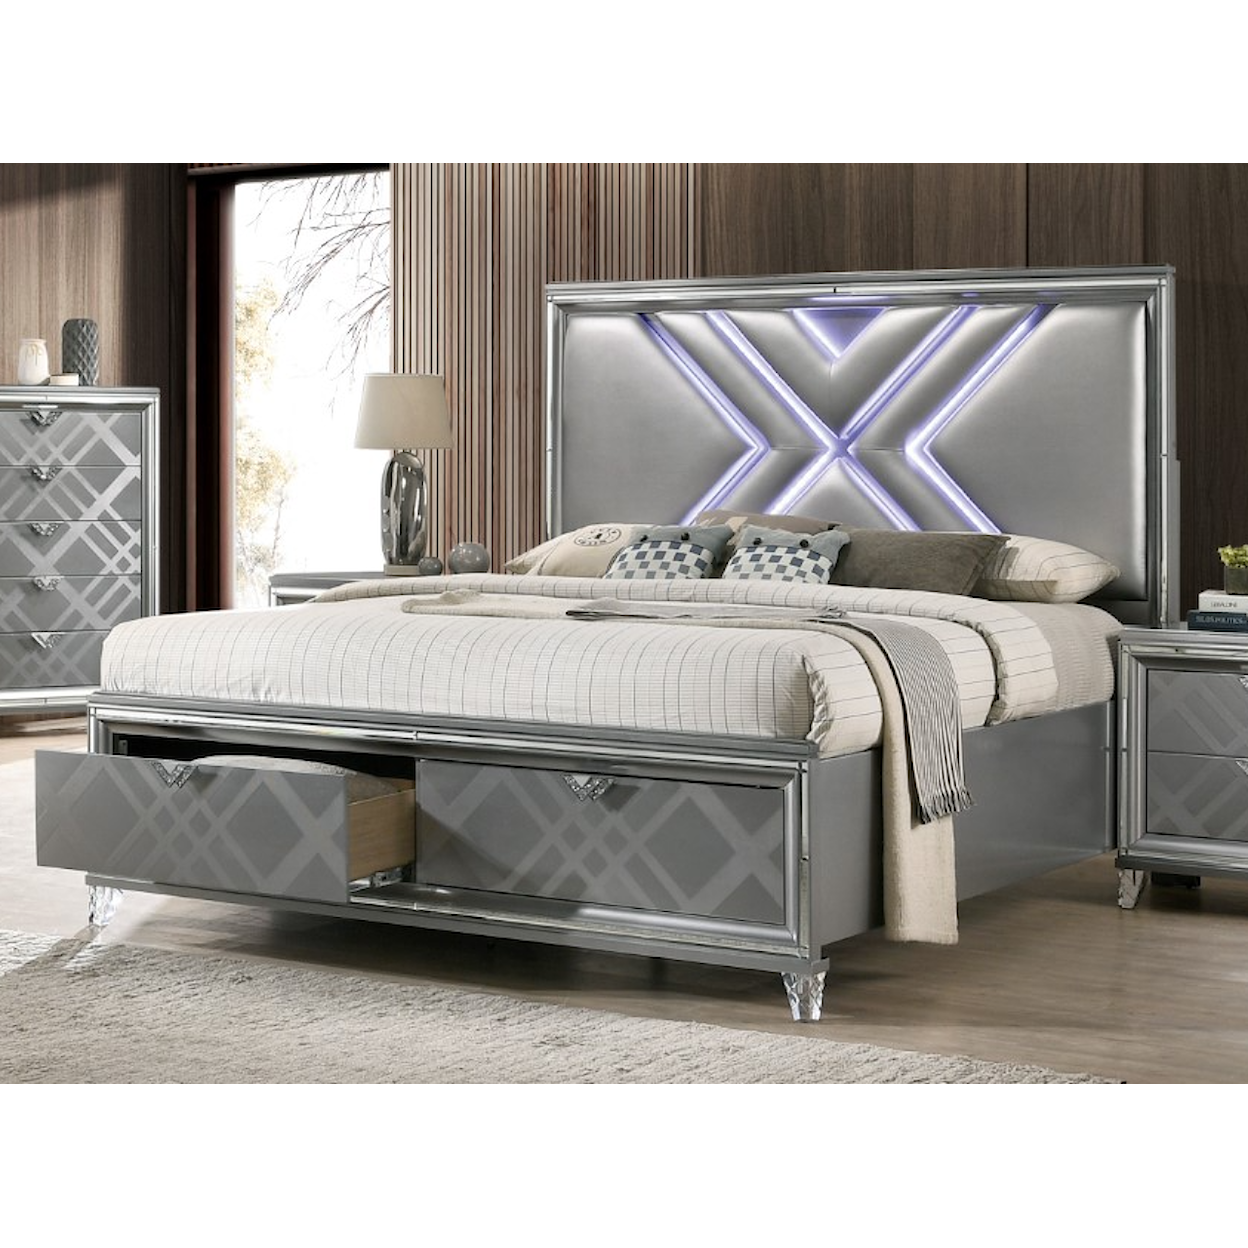 Furniture of America Emmeline Queen Bed